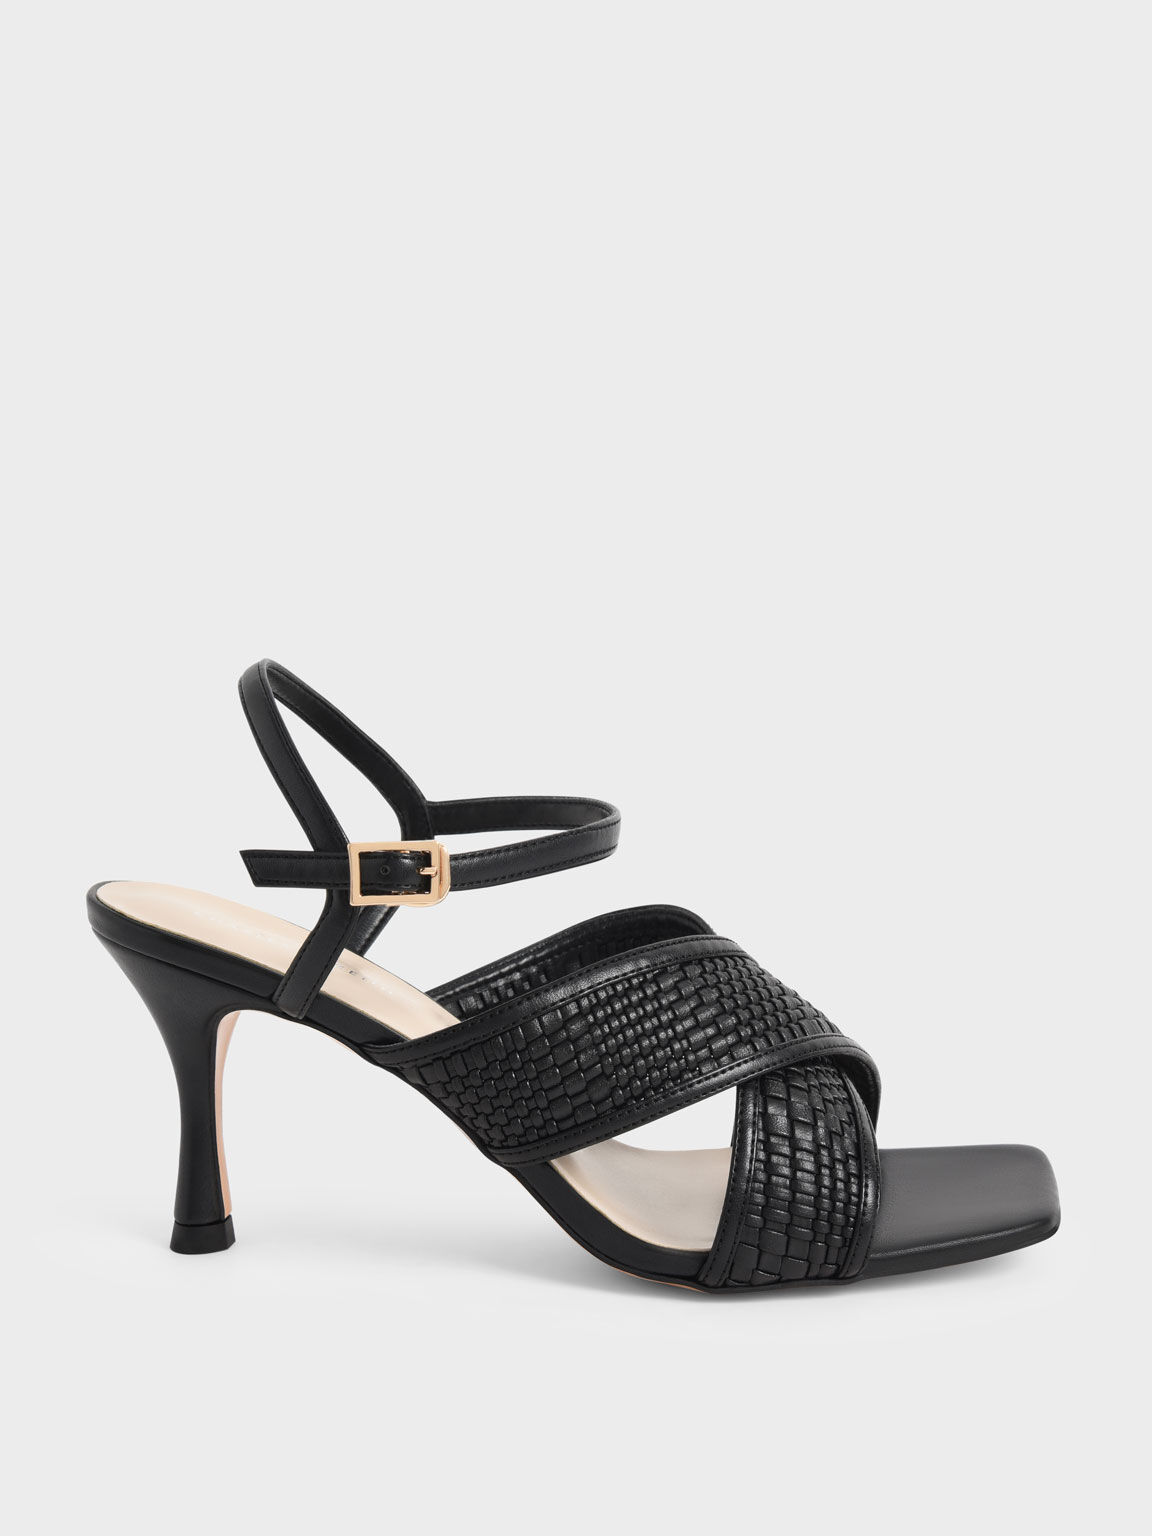 Woven Crossover Slingback Sandals, Black, hi-res